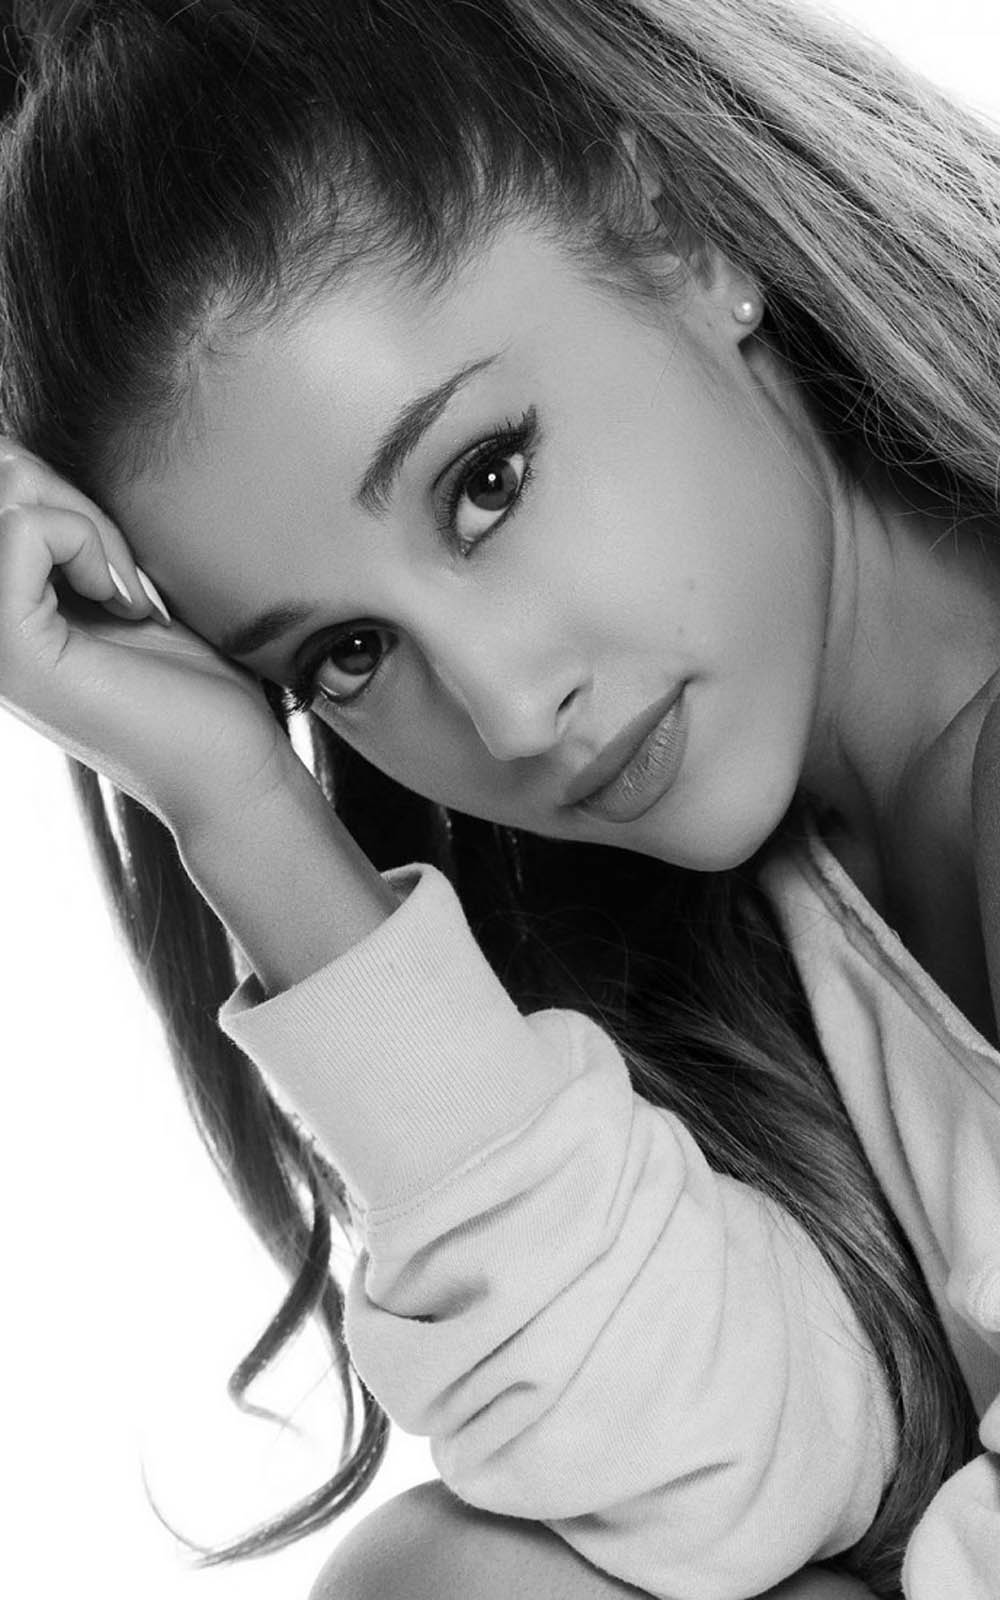 Ariana Grande Black And White 4k Ultra Hd Mobile Wallpaper